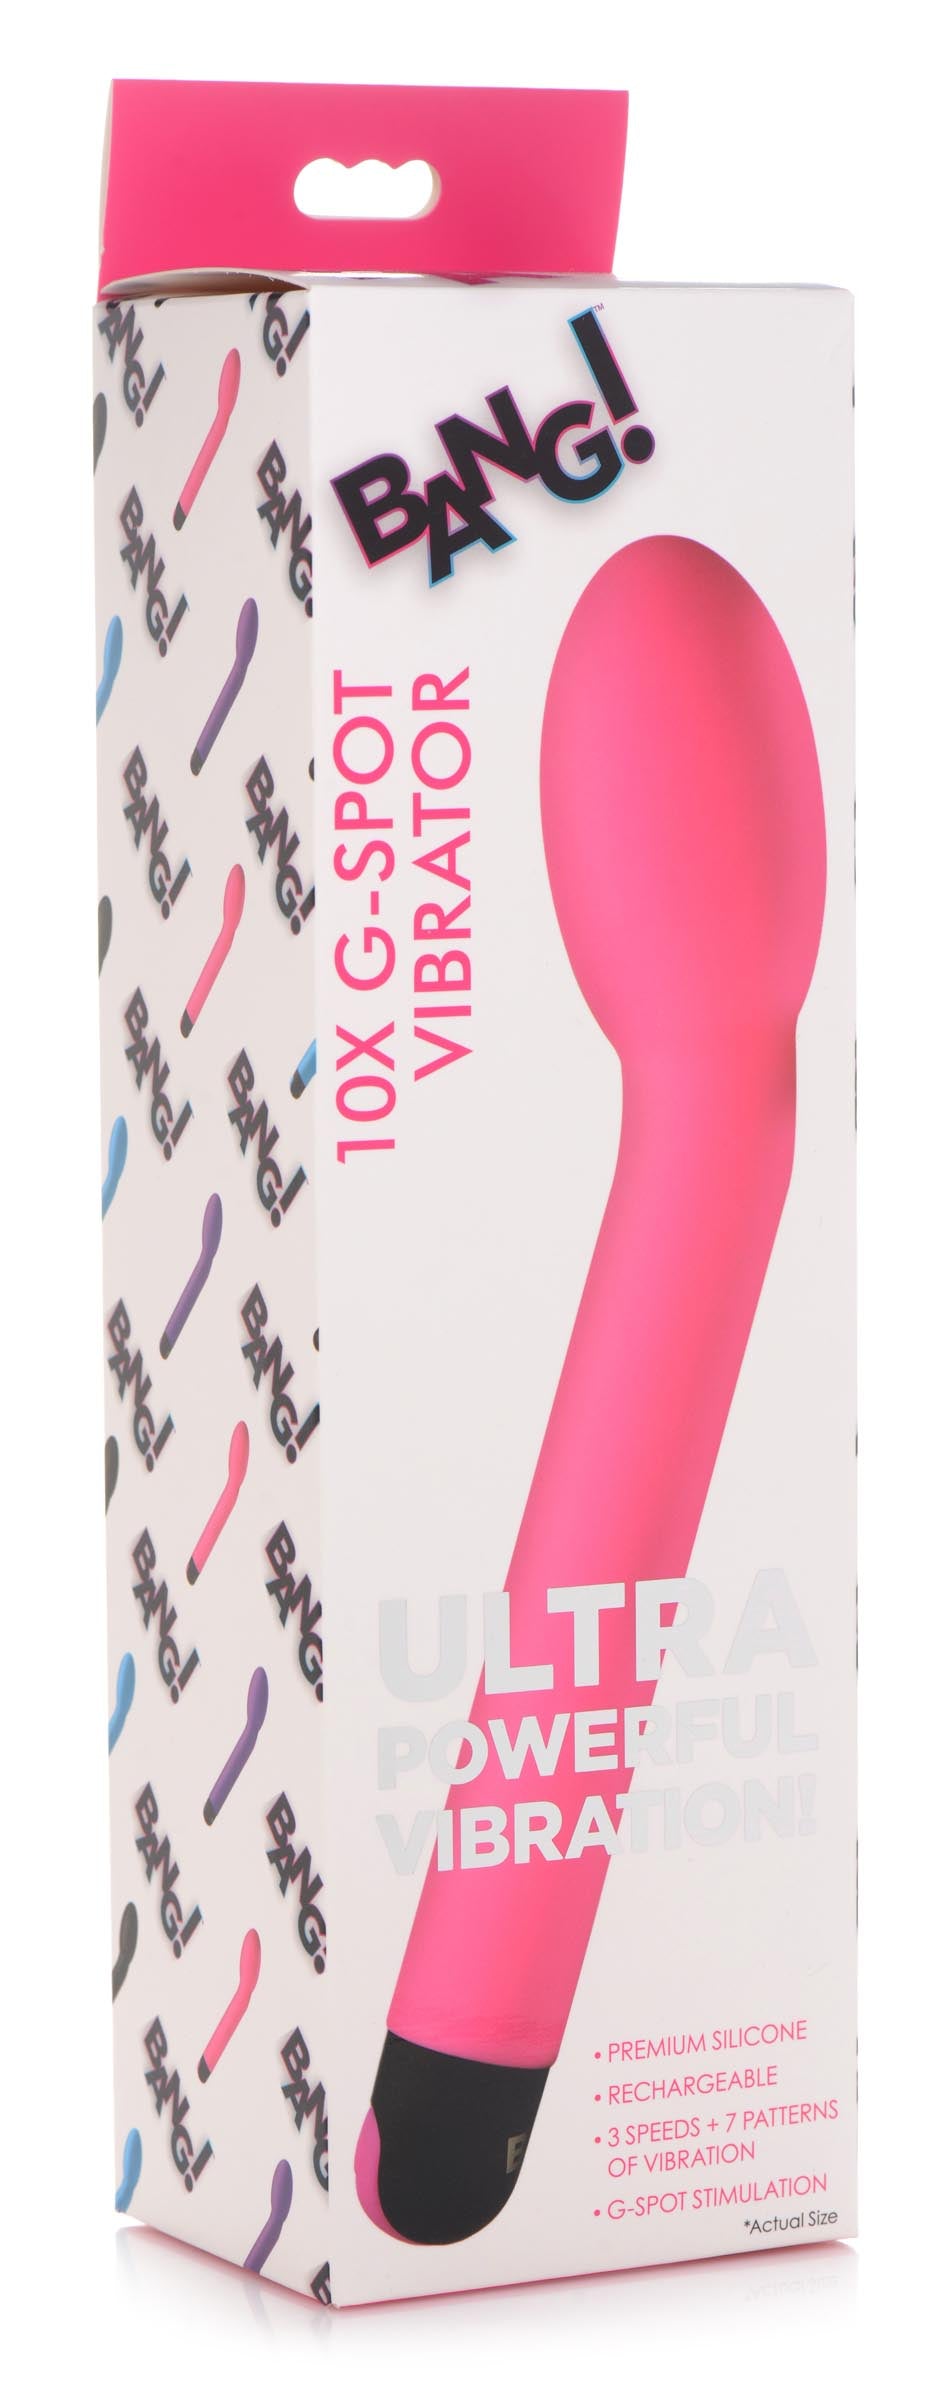 10x Silicone G-spot Vibrator - Pink